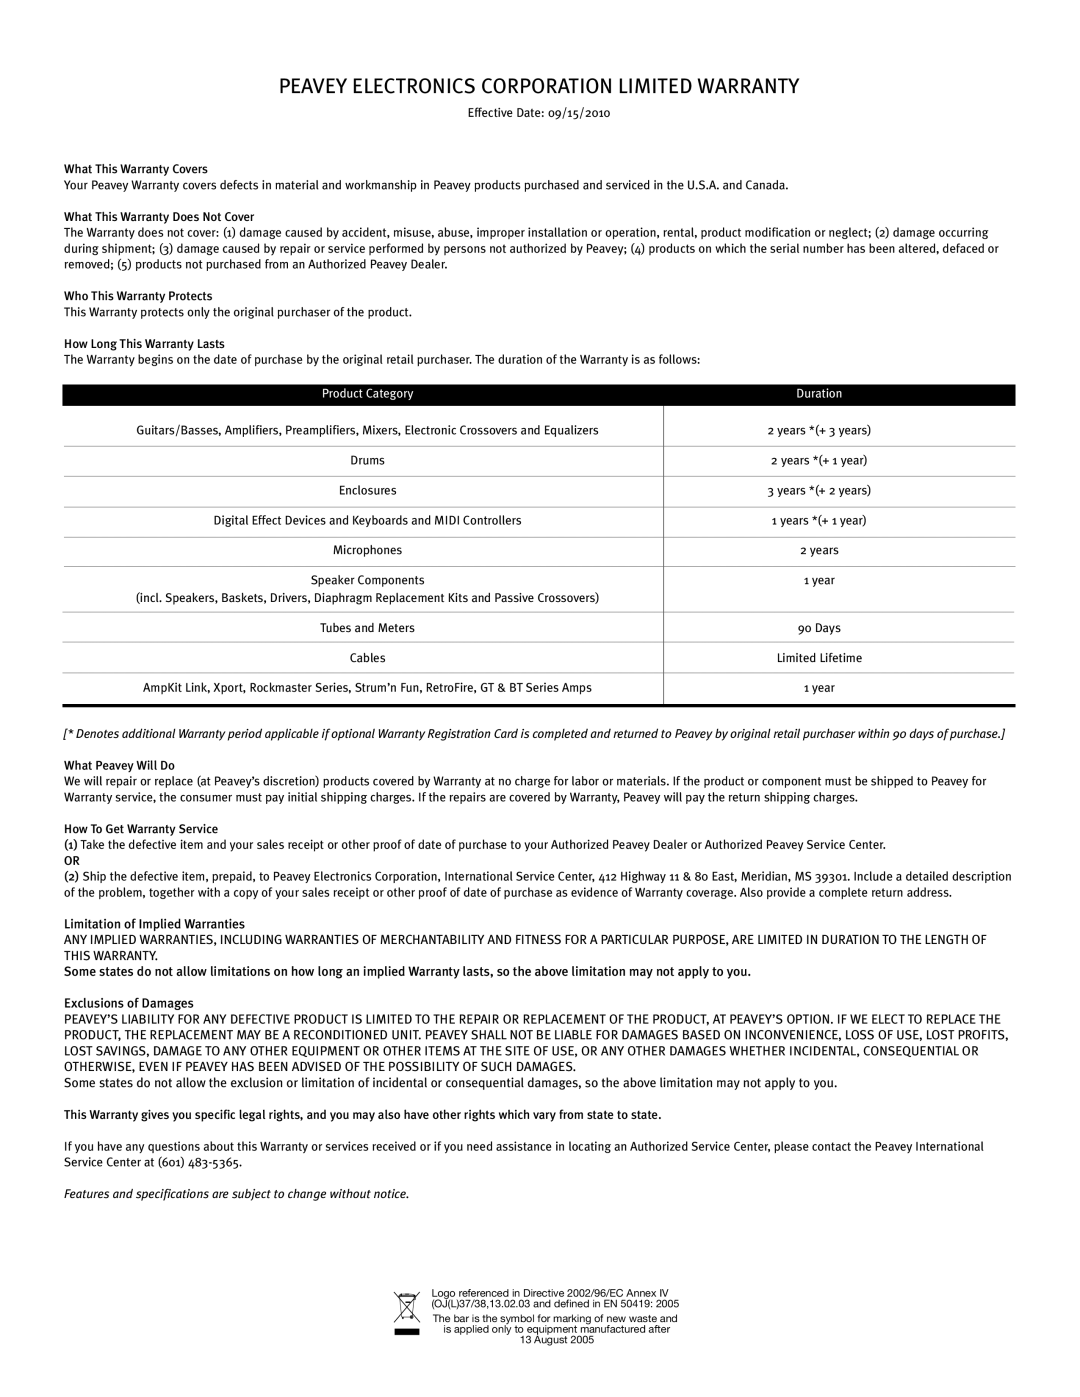 Peavey 35XO manual Peavey Electronics Corporation Limited Warranty, Product Category, Duration 